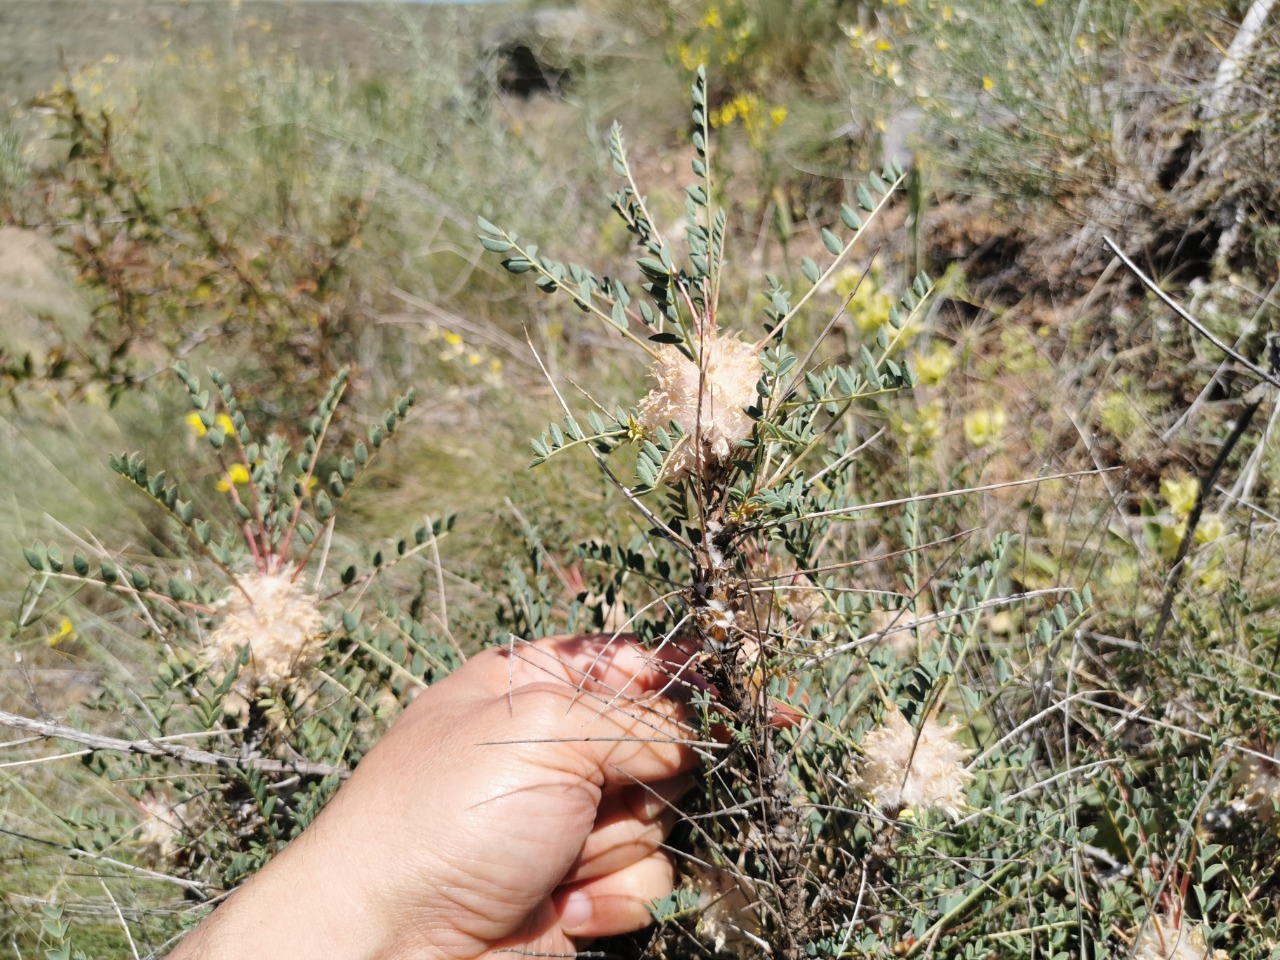 Astragalus cephalotes